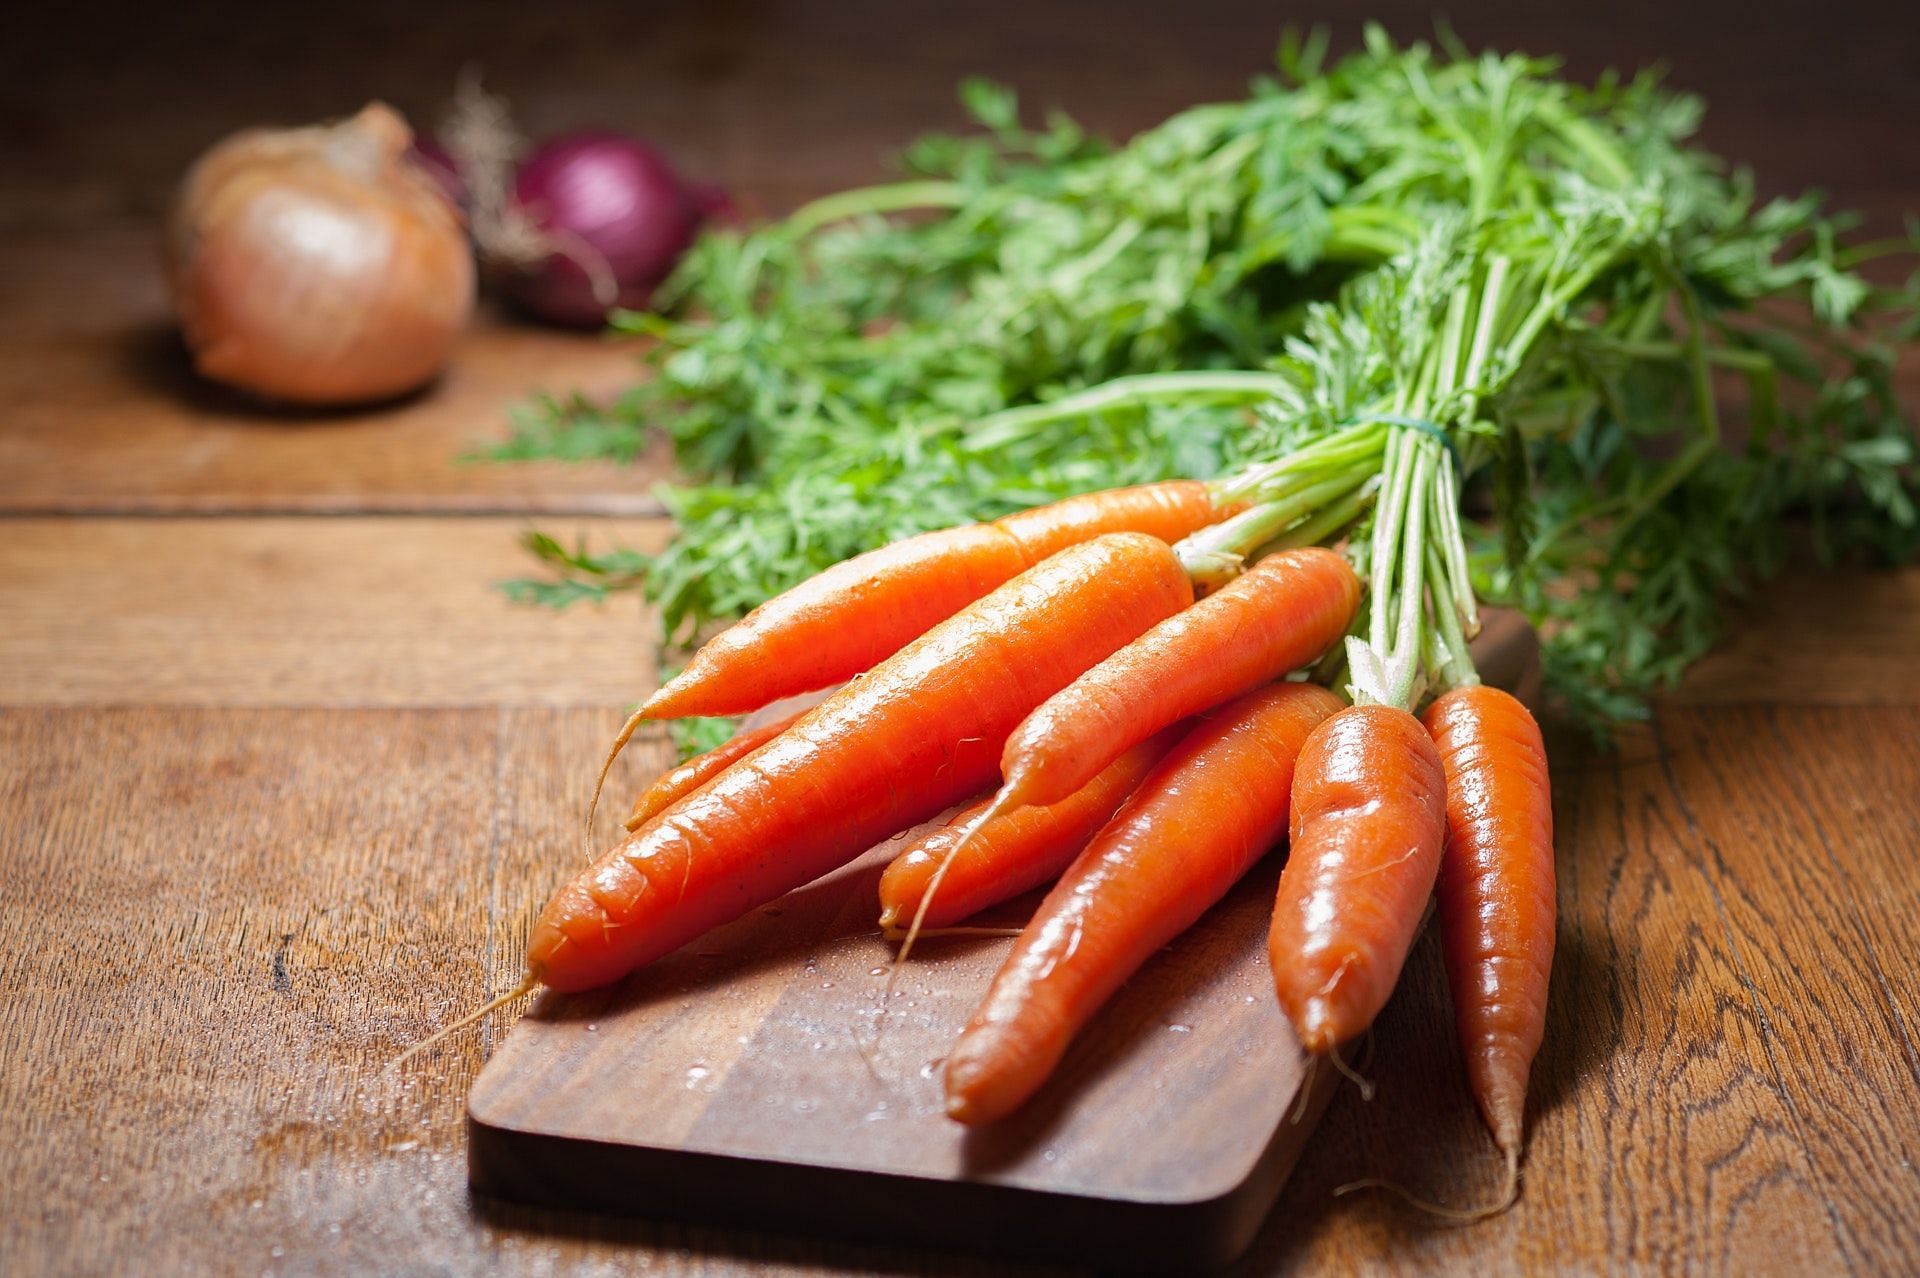 Carrots (Image via Pexels/Mali Maeder)